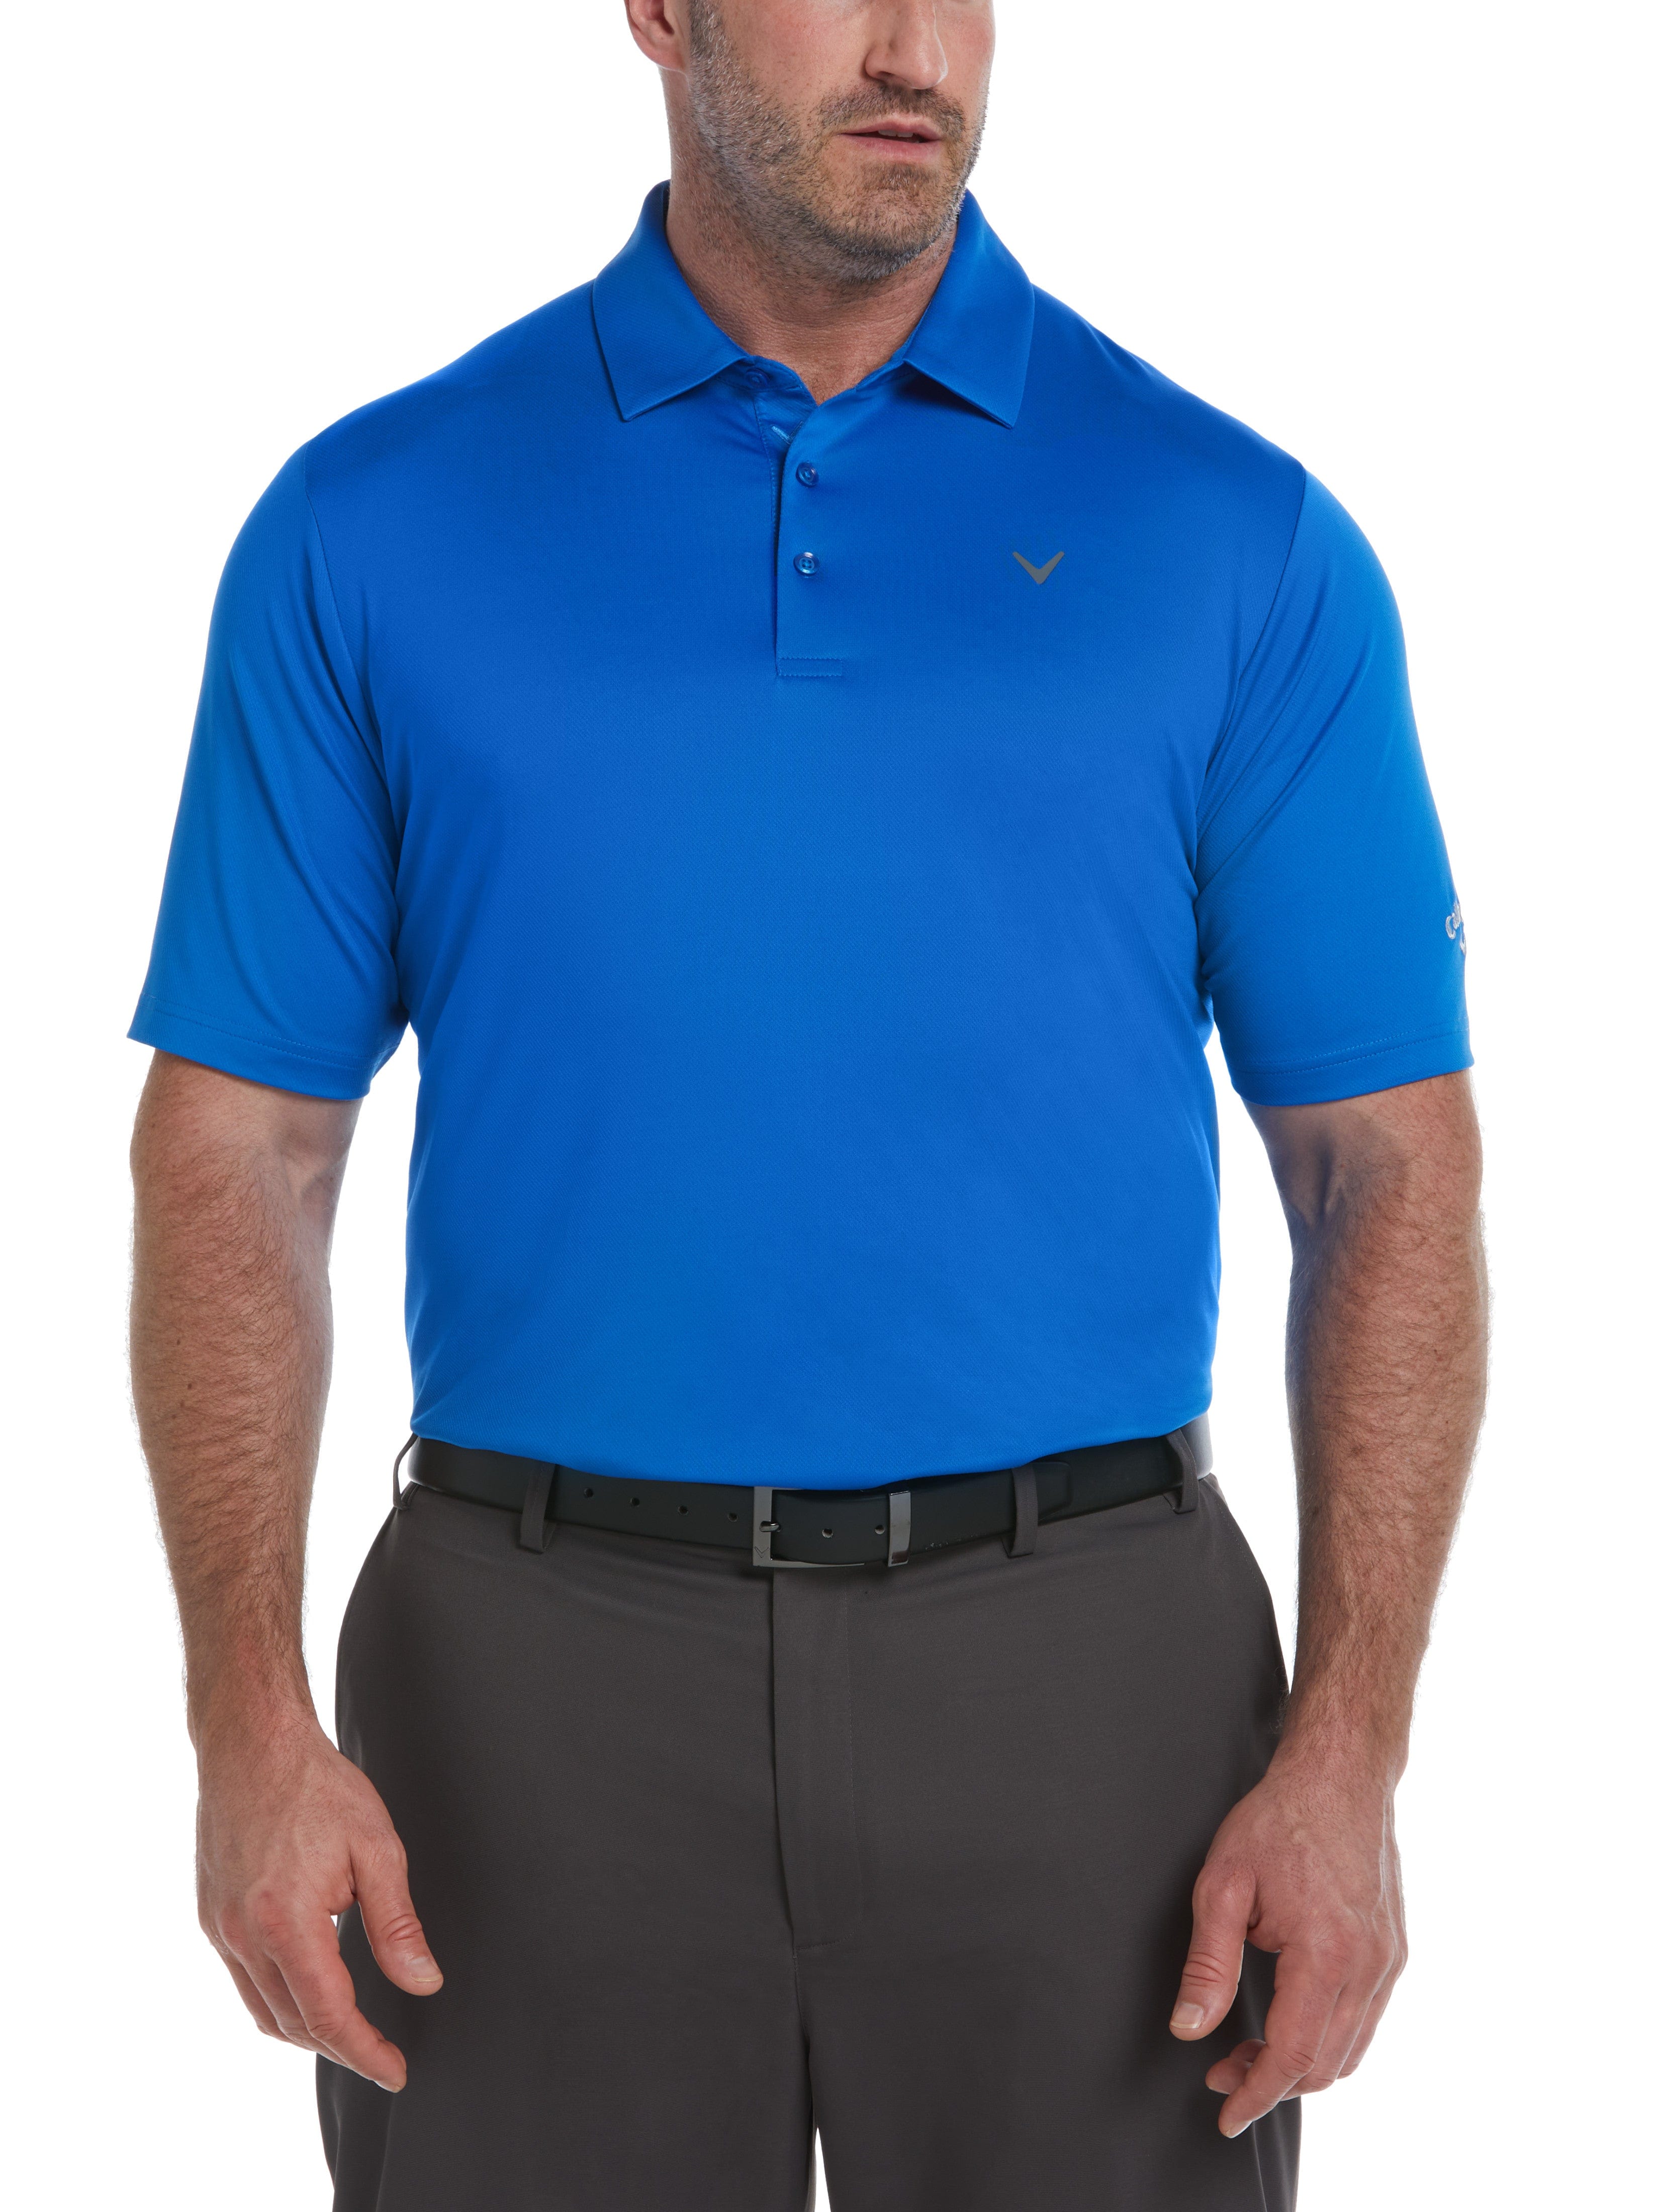 Callaway Apparel Mens Big & Tall Solid Swing Tech Golf Polo Shirt, Size 5X, Magnetic Blue, Polyester/Elastane | Golf Apparel Shop